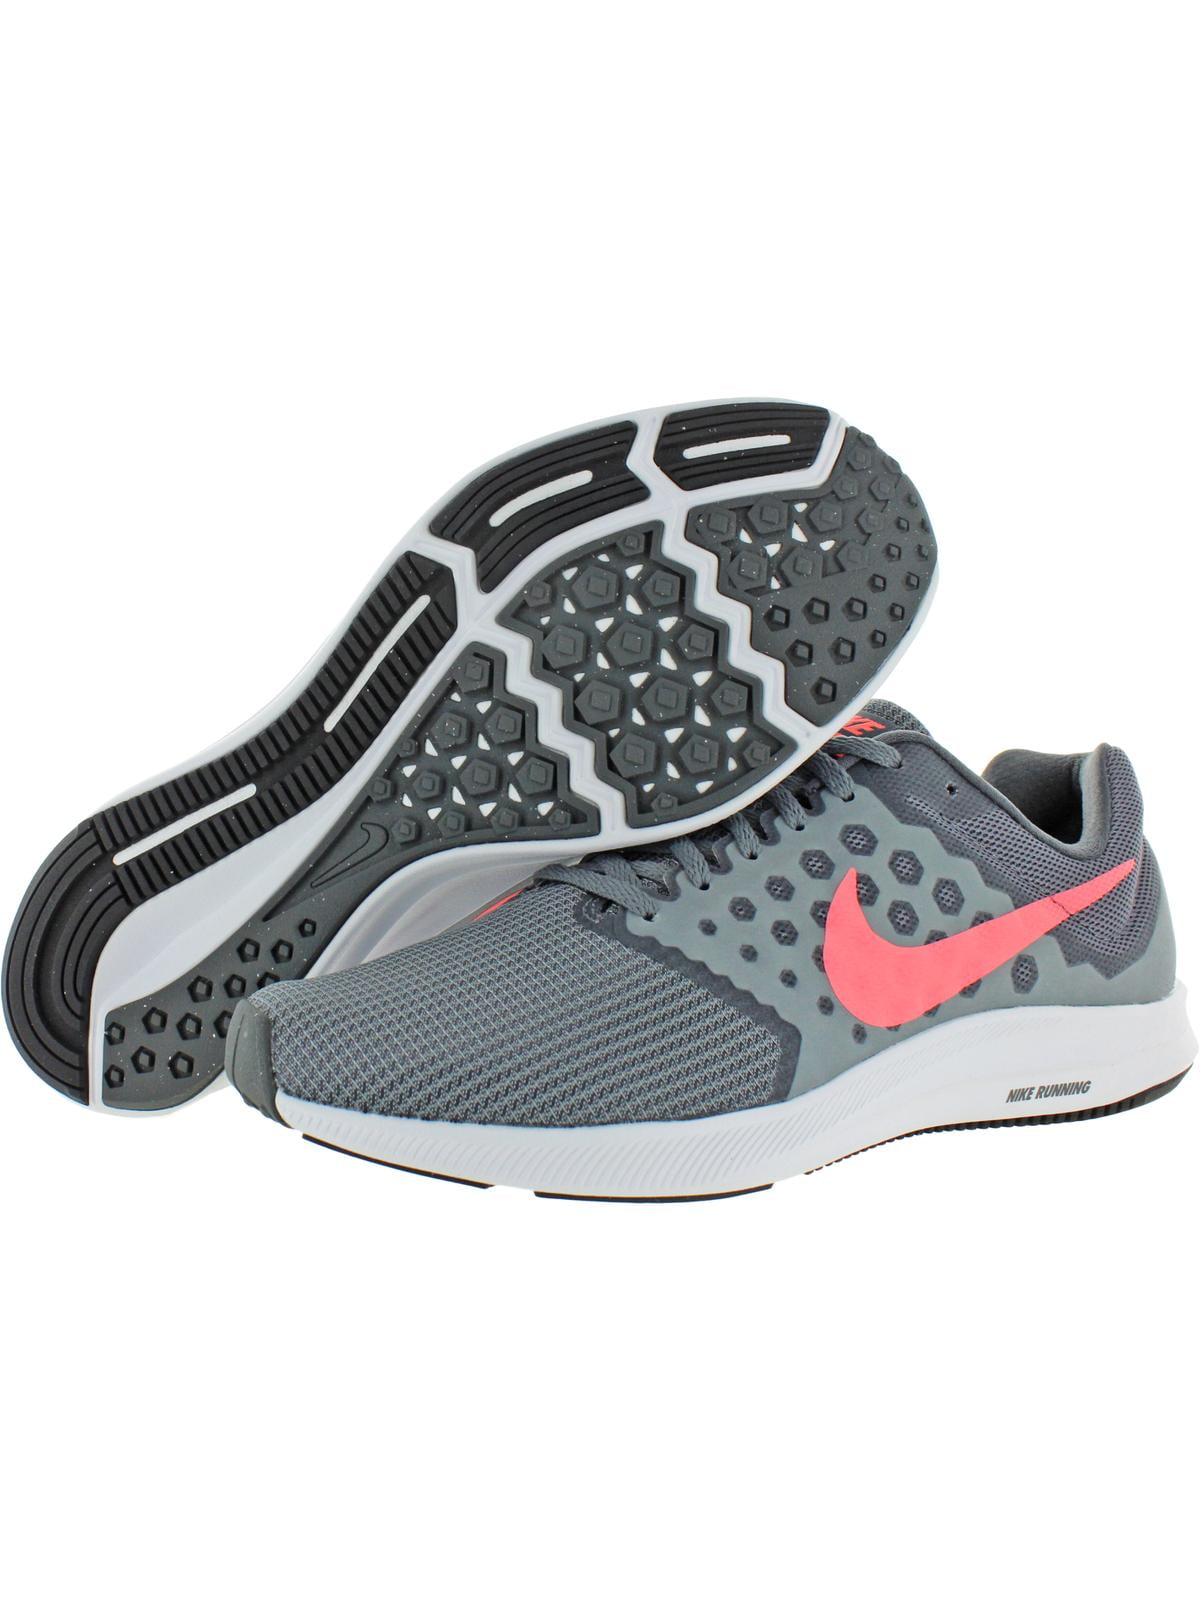 Inmoralidad absceso Charlotte Bronte Nike Women's Downshifter 7 Cool Grey / Lava Glow Dark Ankle-High Running -  10M - Walmart.com